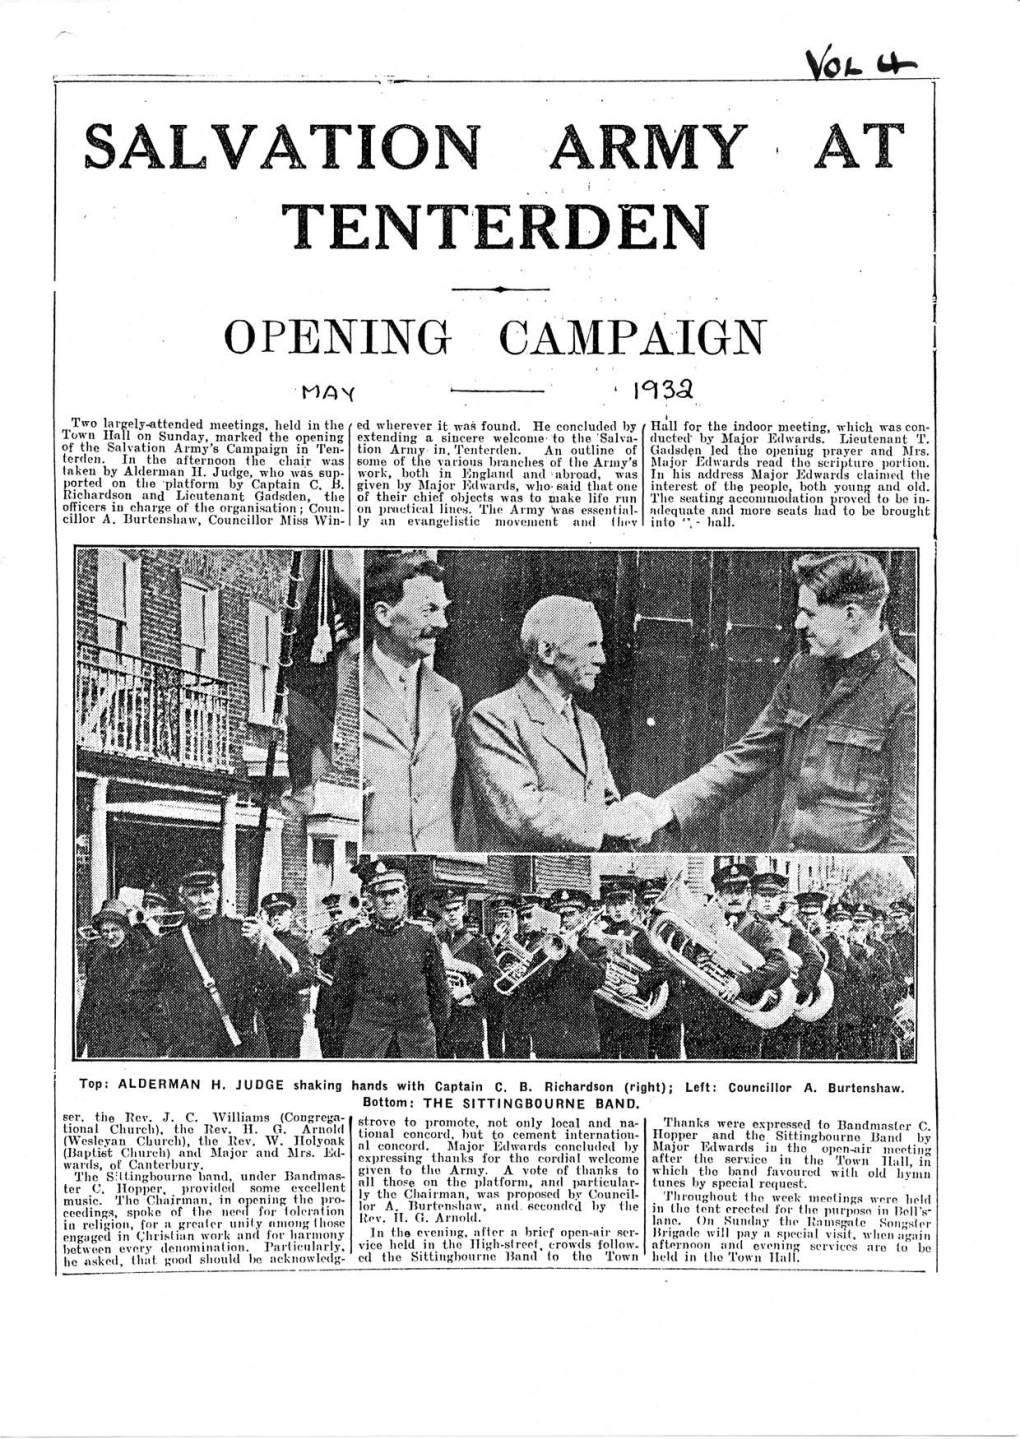 Tenterden-Archive-Clippings-Vol-4.Pdf